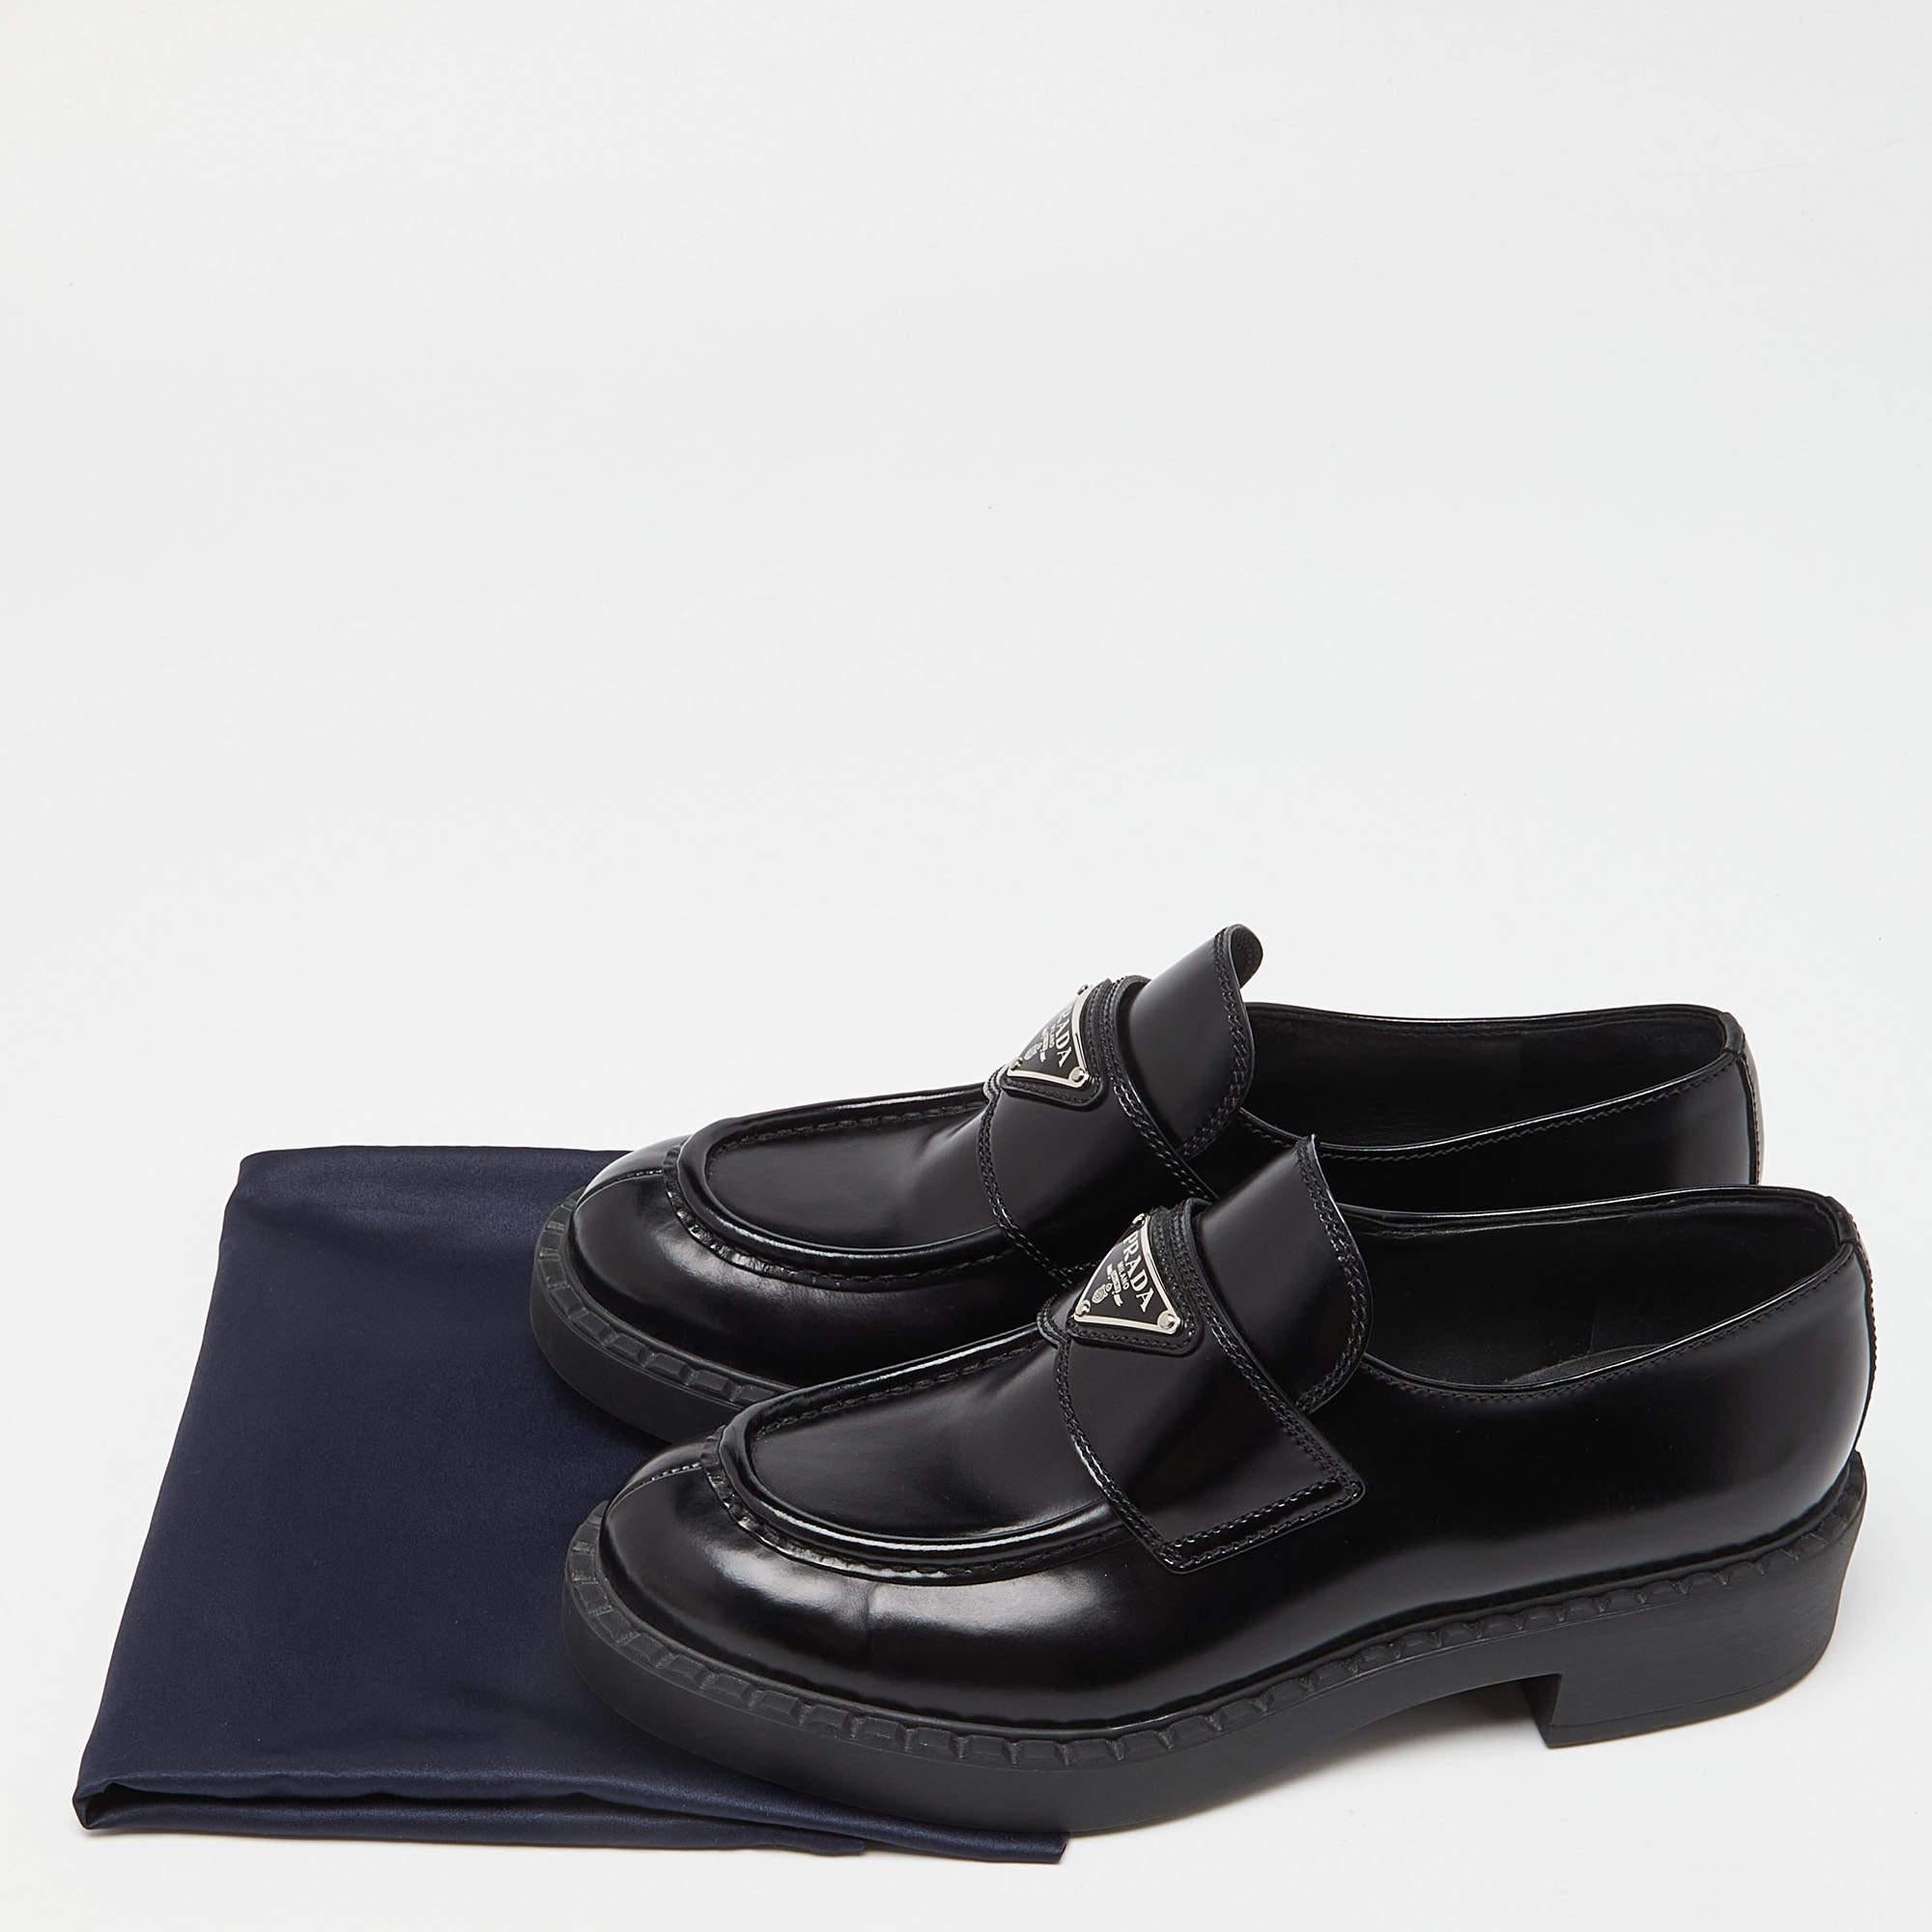 Prada Black Patent Leather Platform Loafers Size 36.5 5